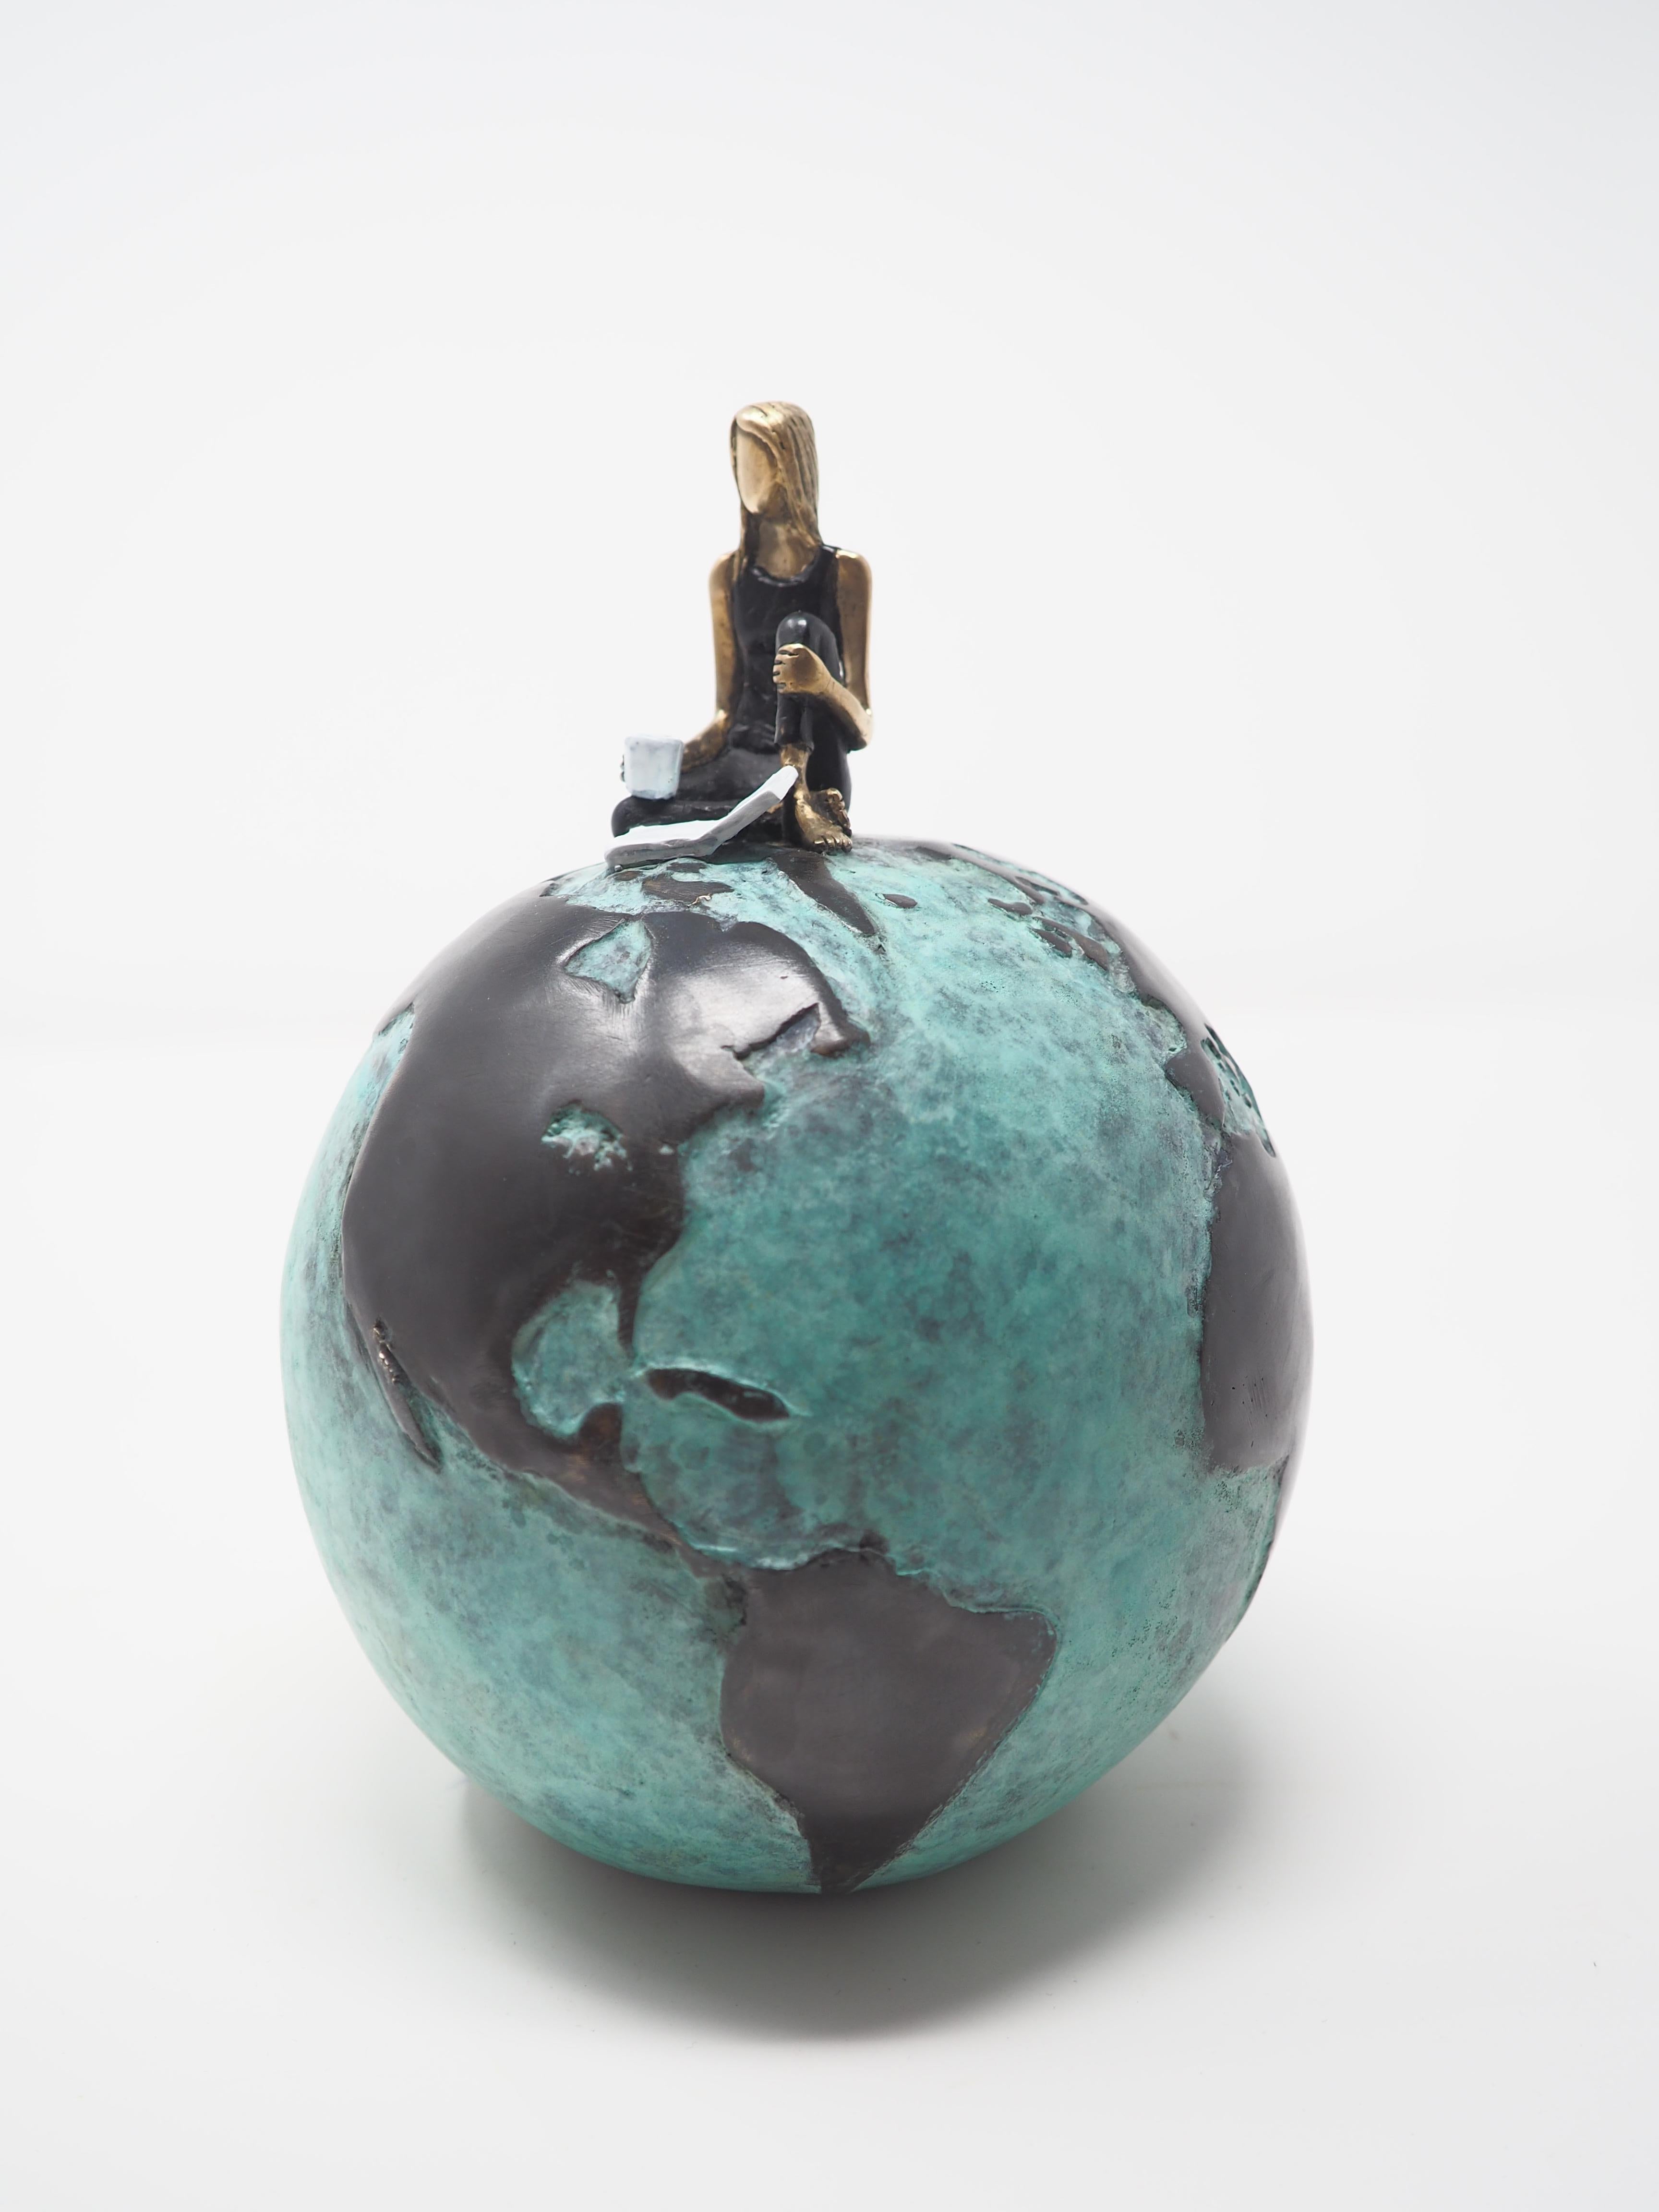 Mireia Serra Figurative Sculpture - Globe- contemporary figurative bronze sculpture of a woman and a book on a globe